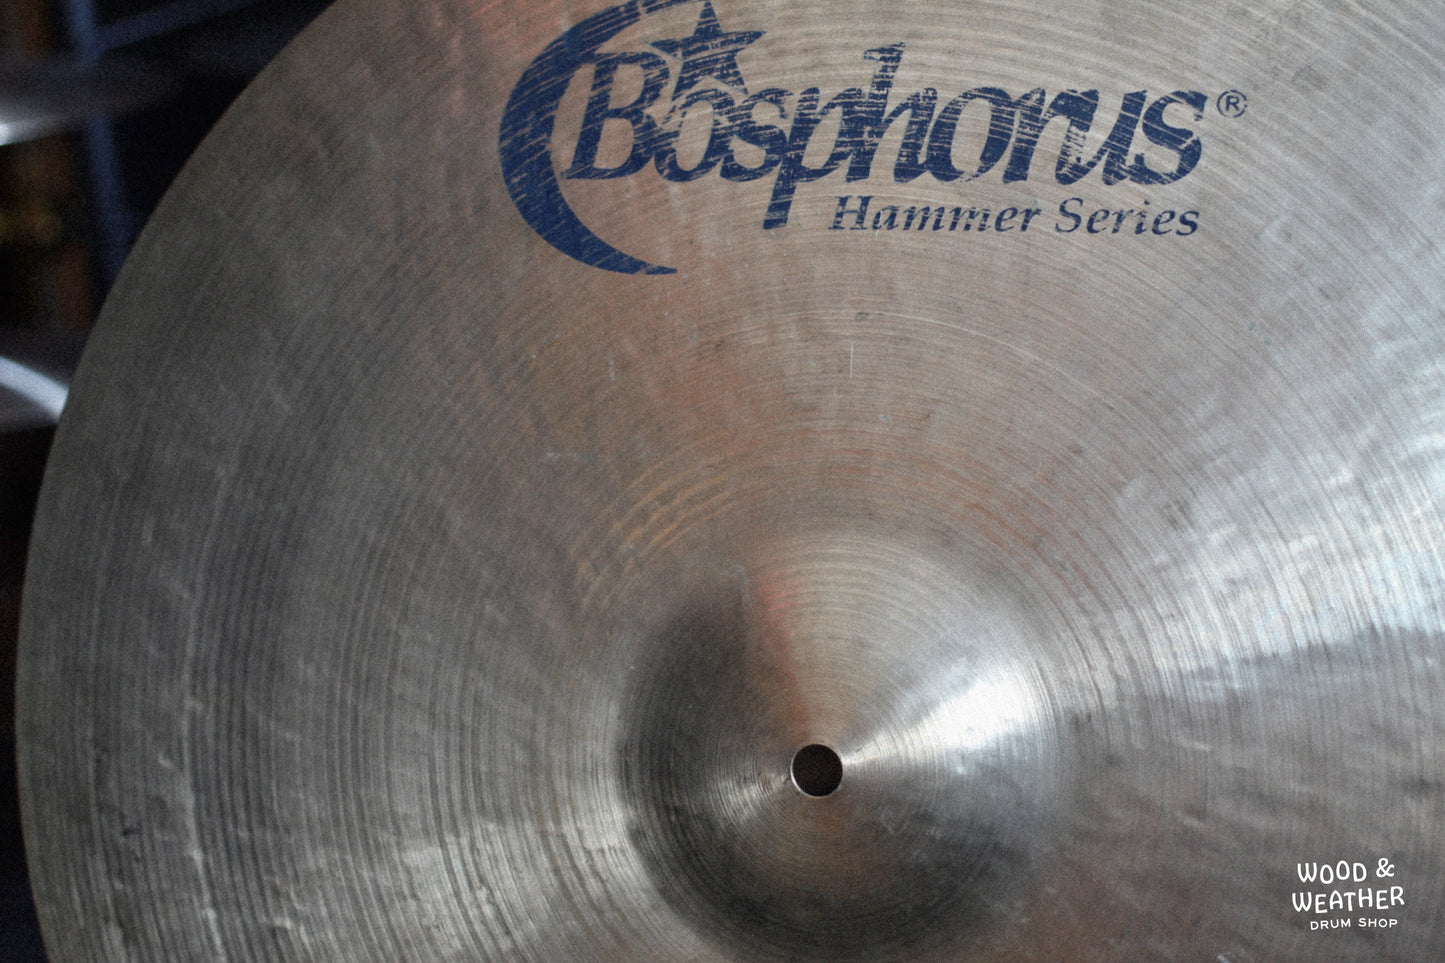 Used Bosphorus 20" Hammer Series Crash/Ride Cymbal 1624g